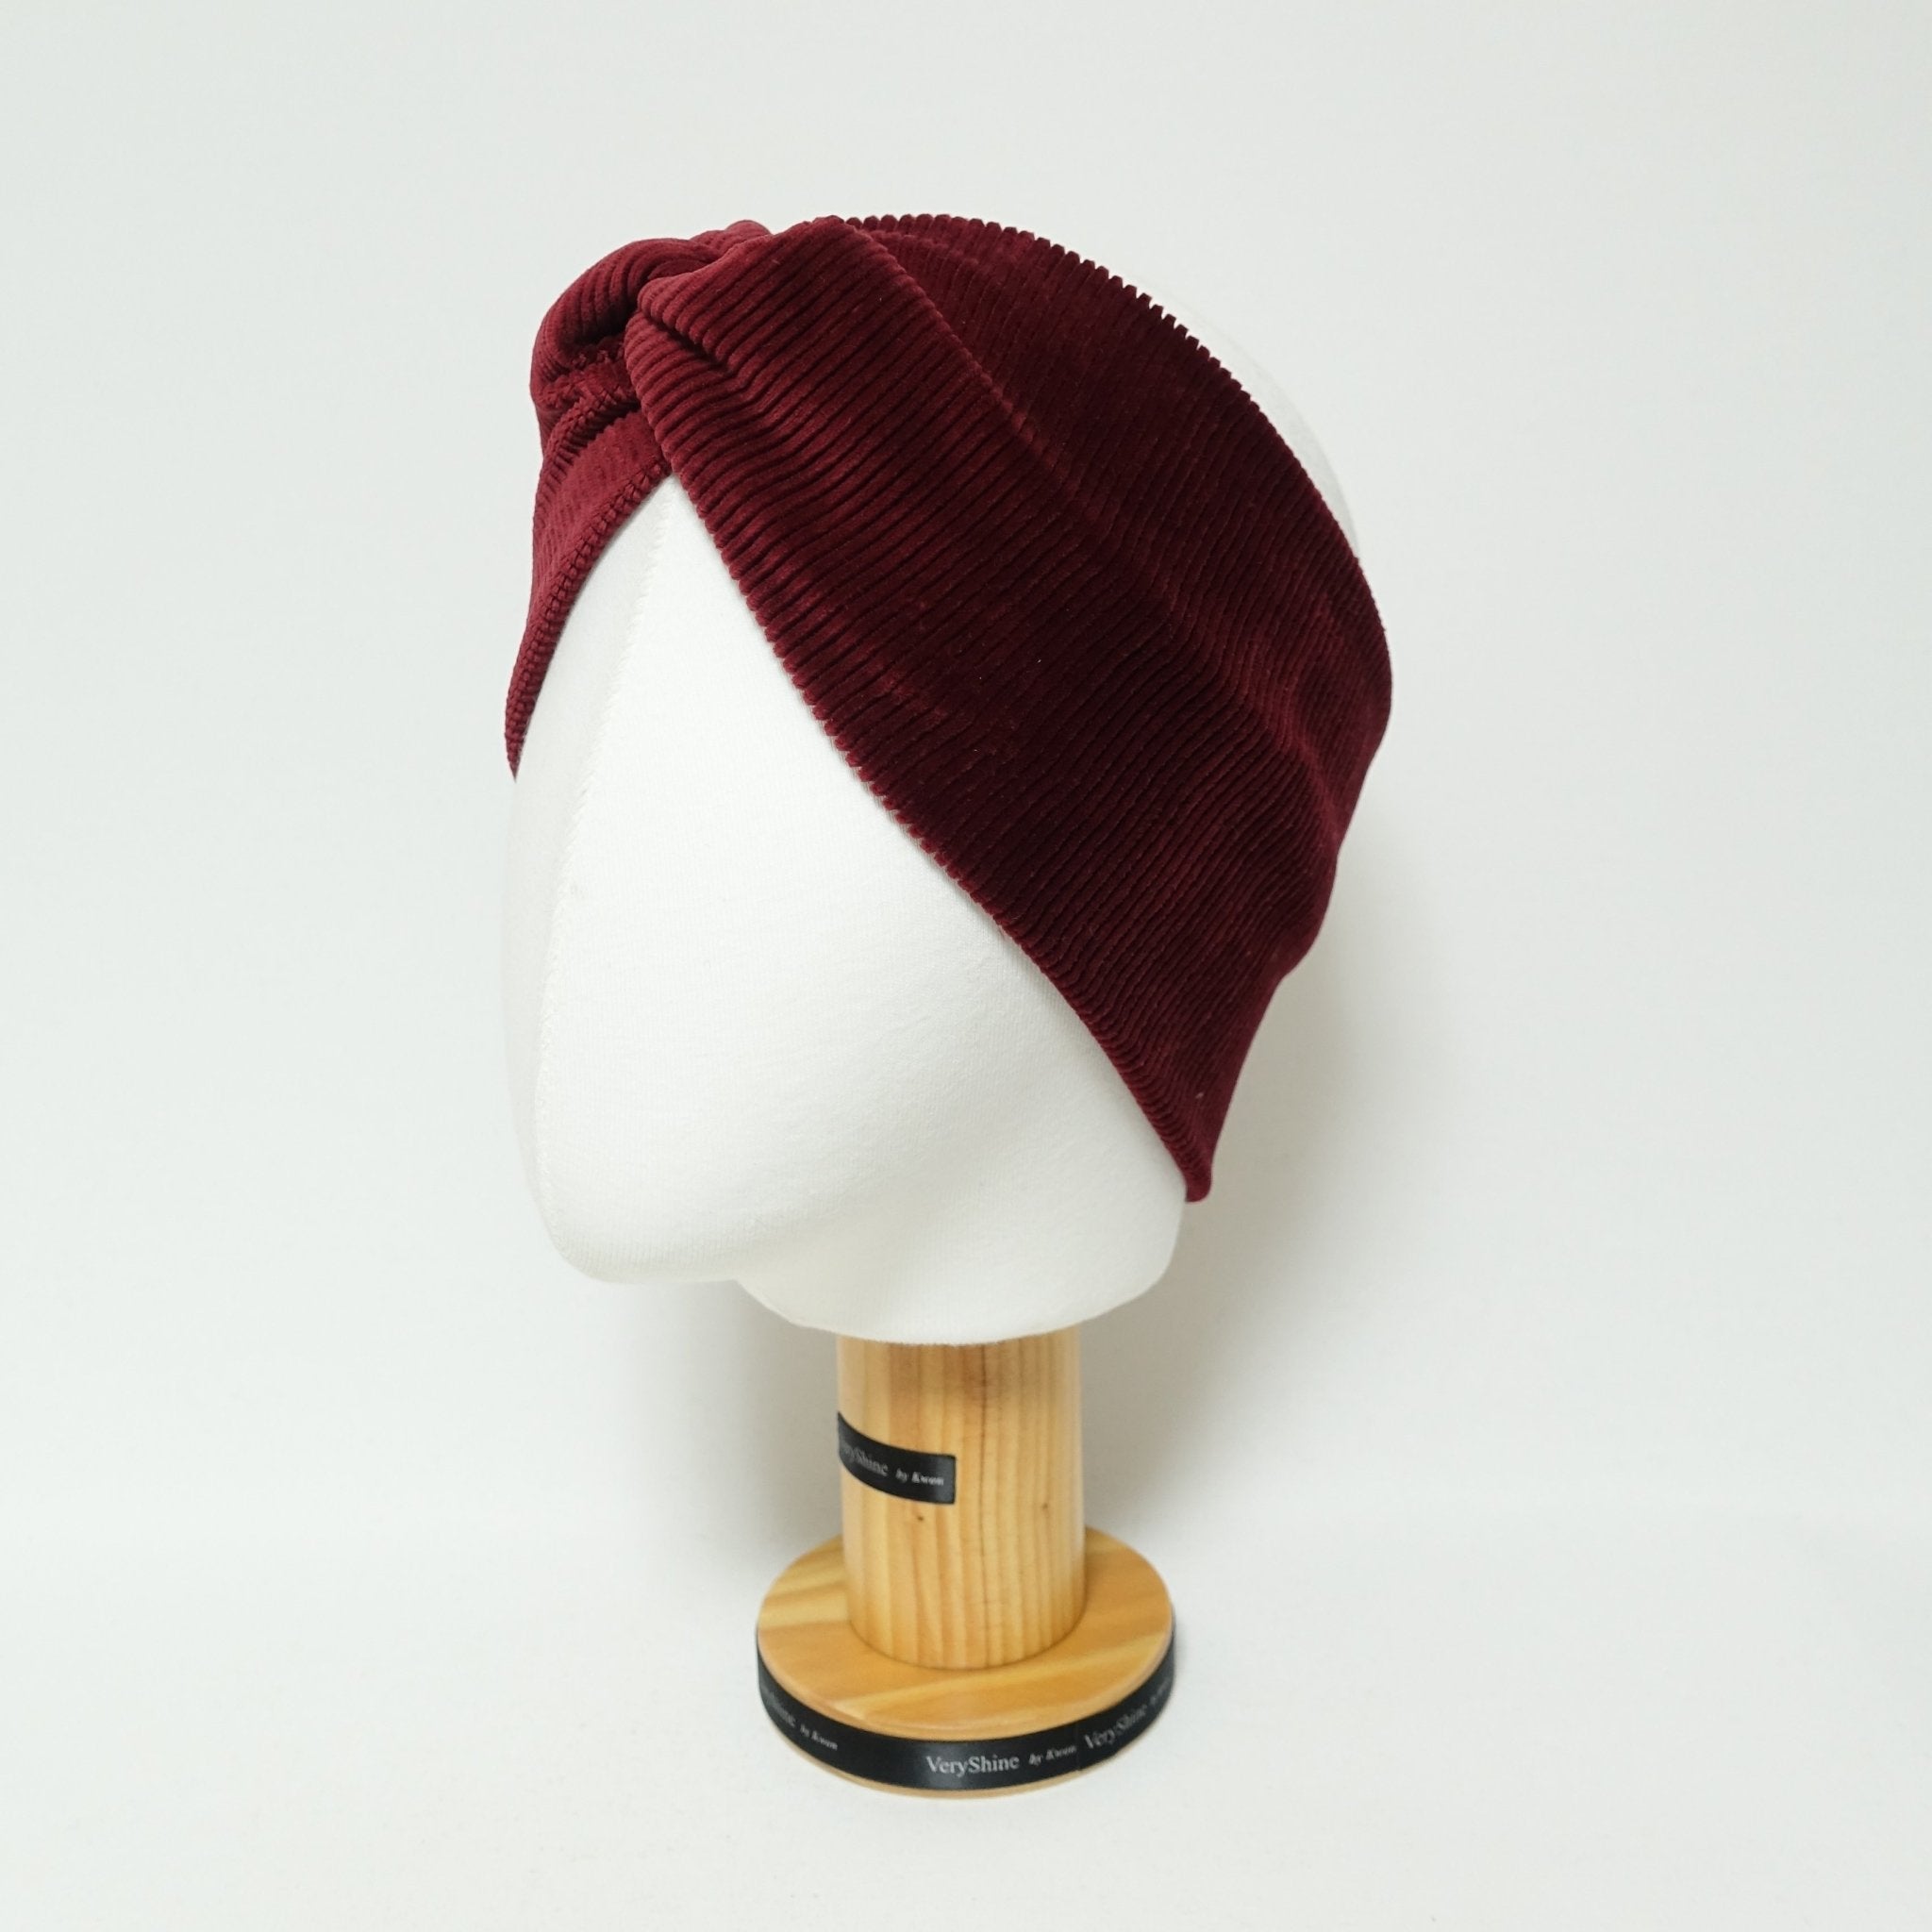 veryshine.com hairband/headband Red wine corduroy front twist fashion headband no elastic band women headwrap